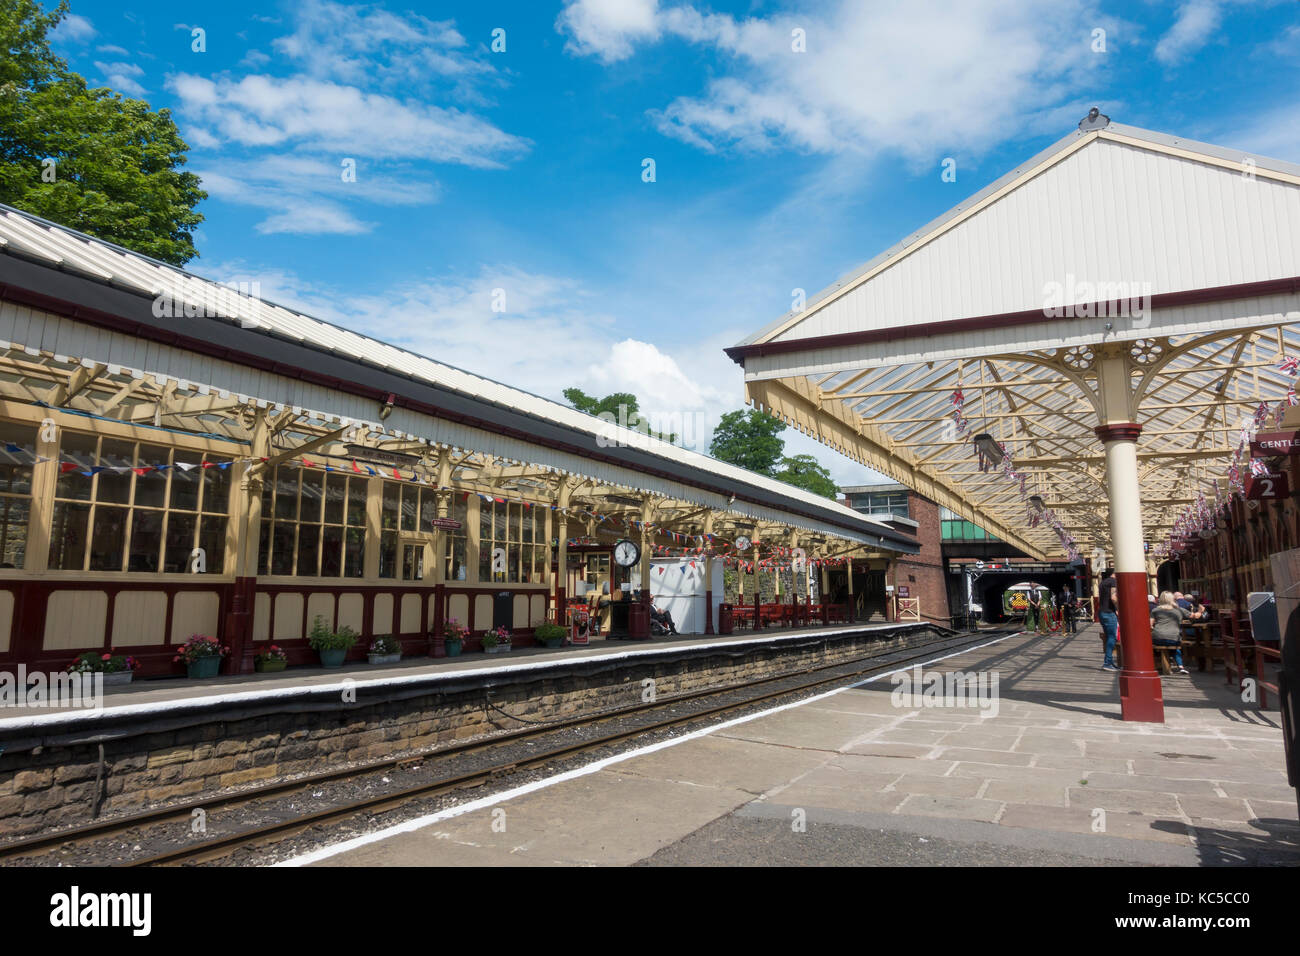 Railway Platform at Bolton Street Station, Bury on the East Lancashire Railway Stock Photo